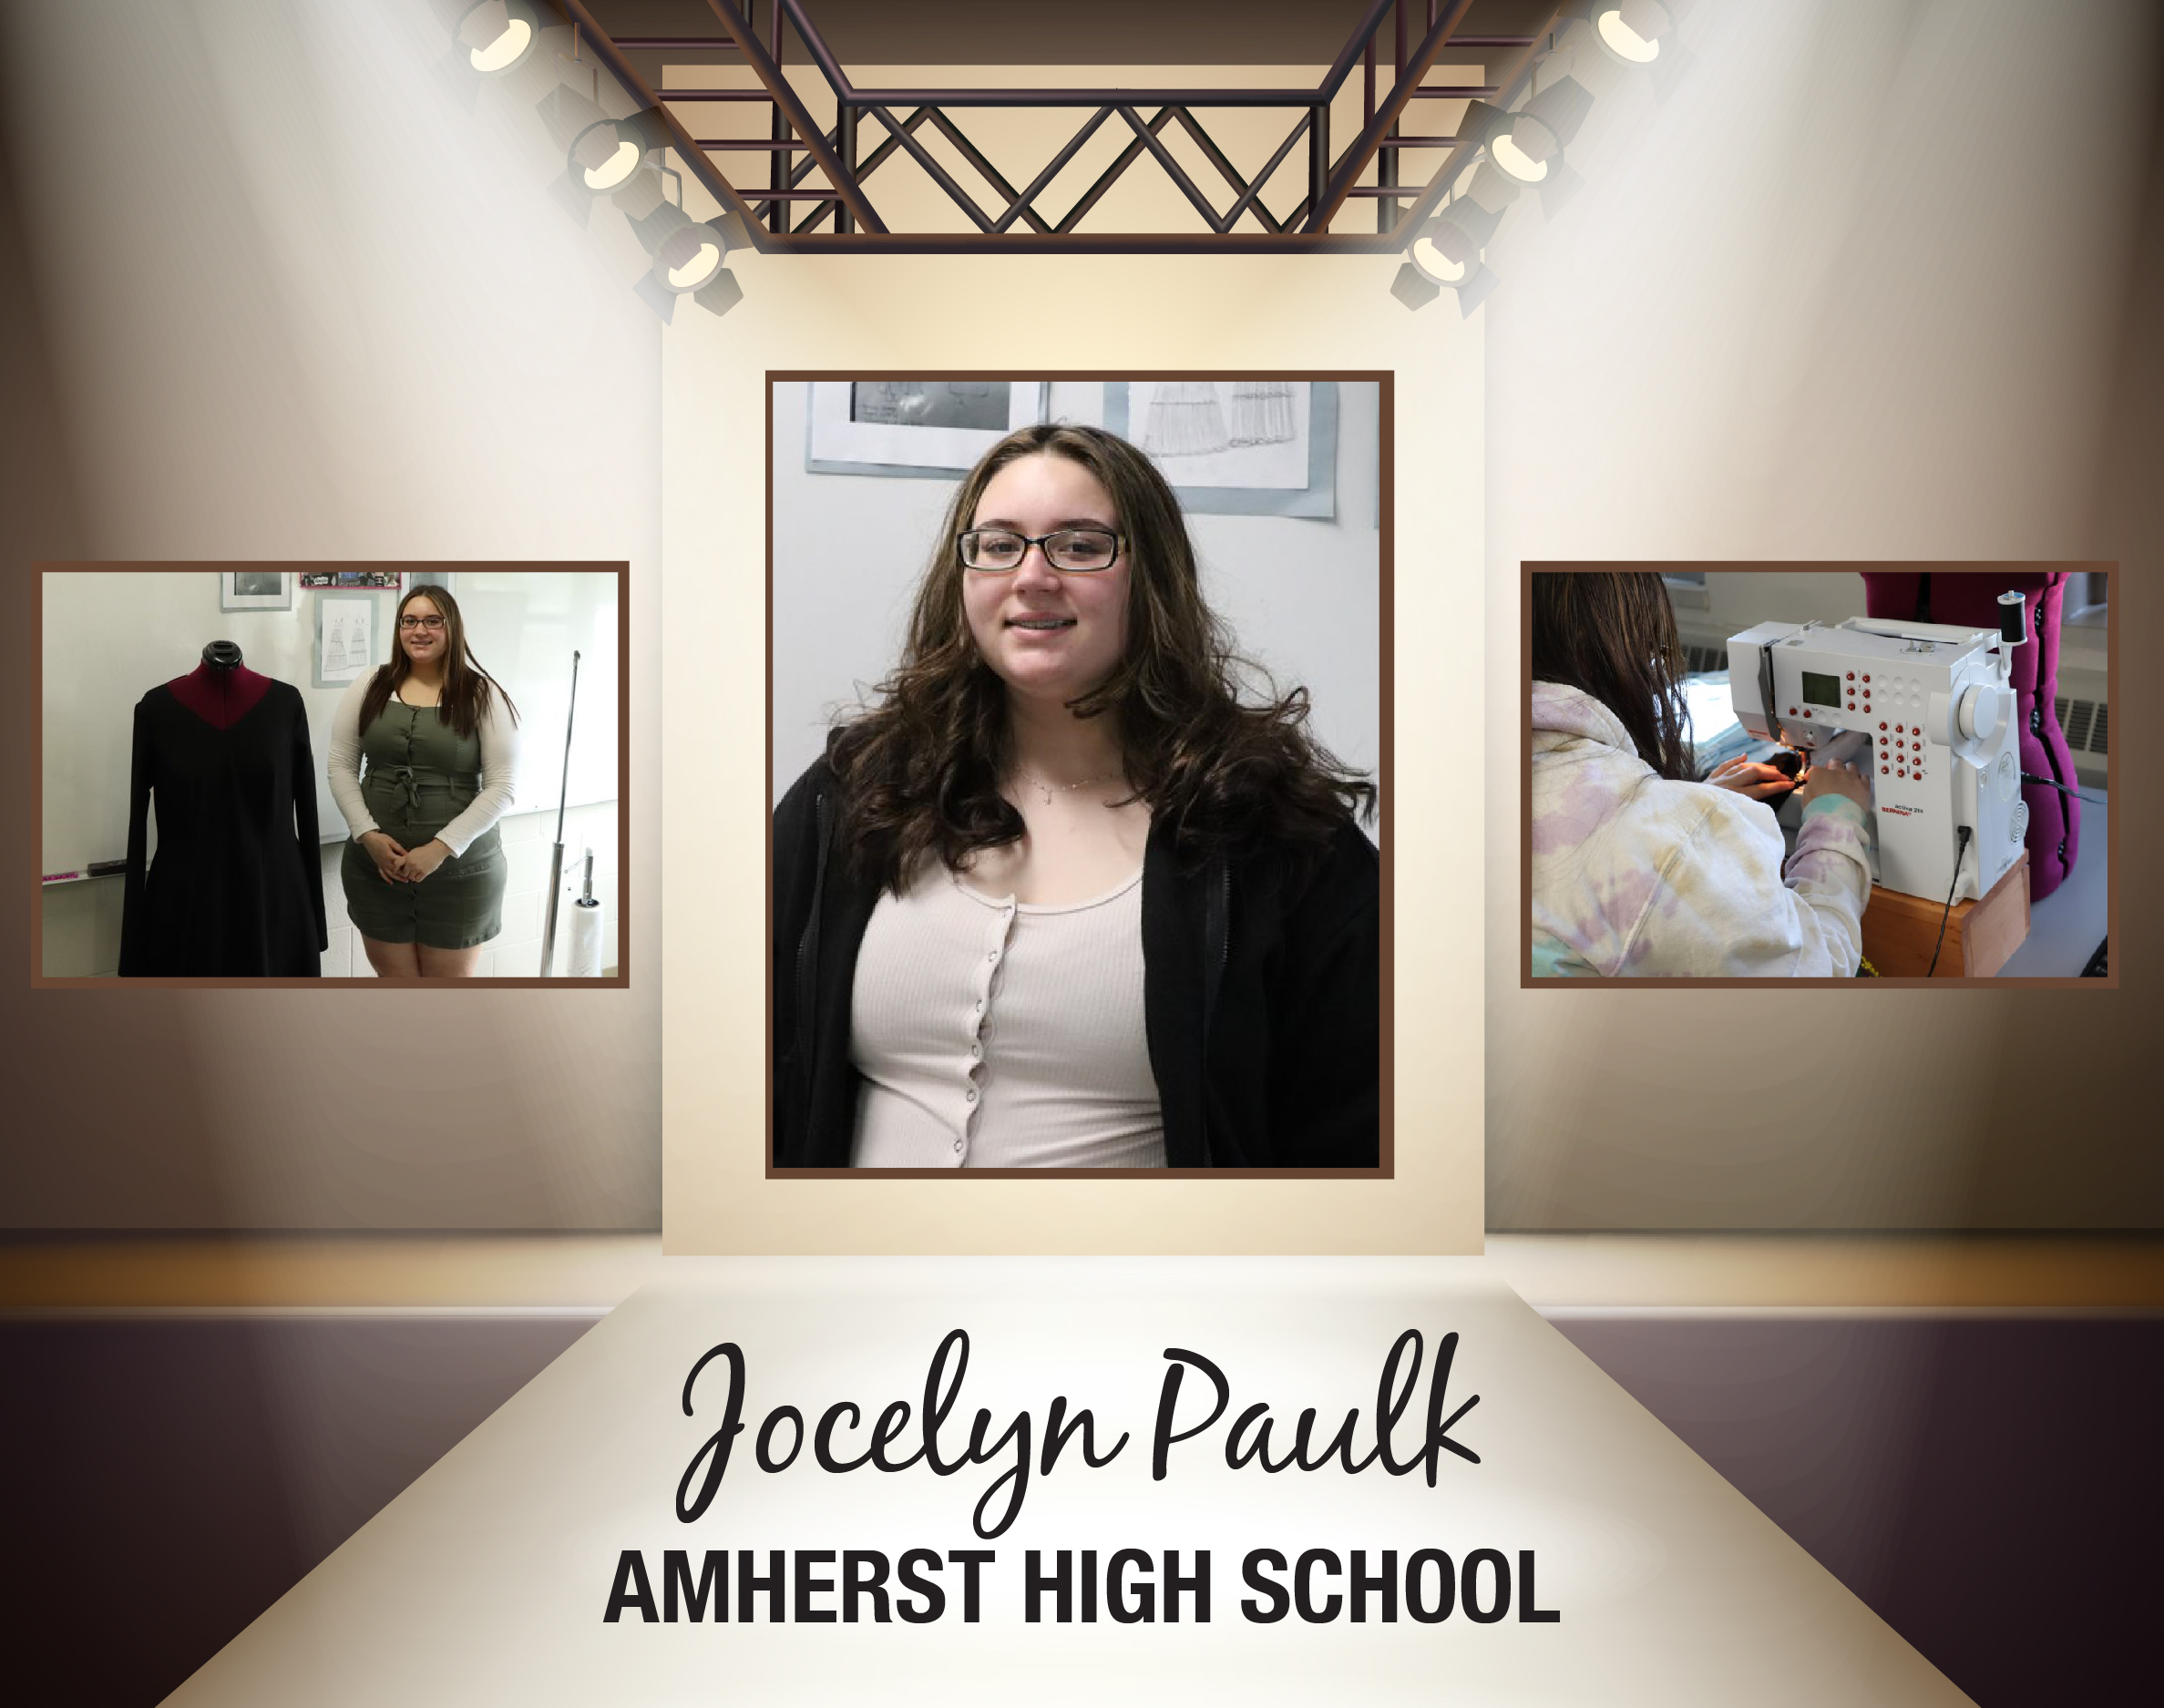 Jocelyn Paulk Amherst High School